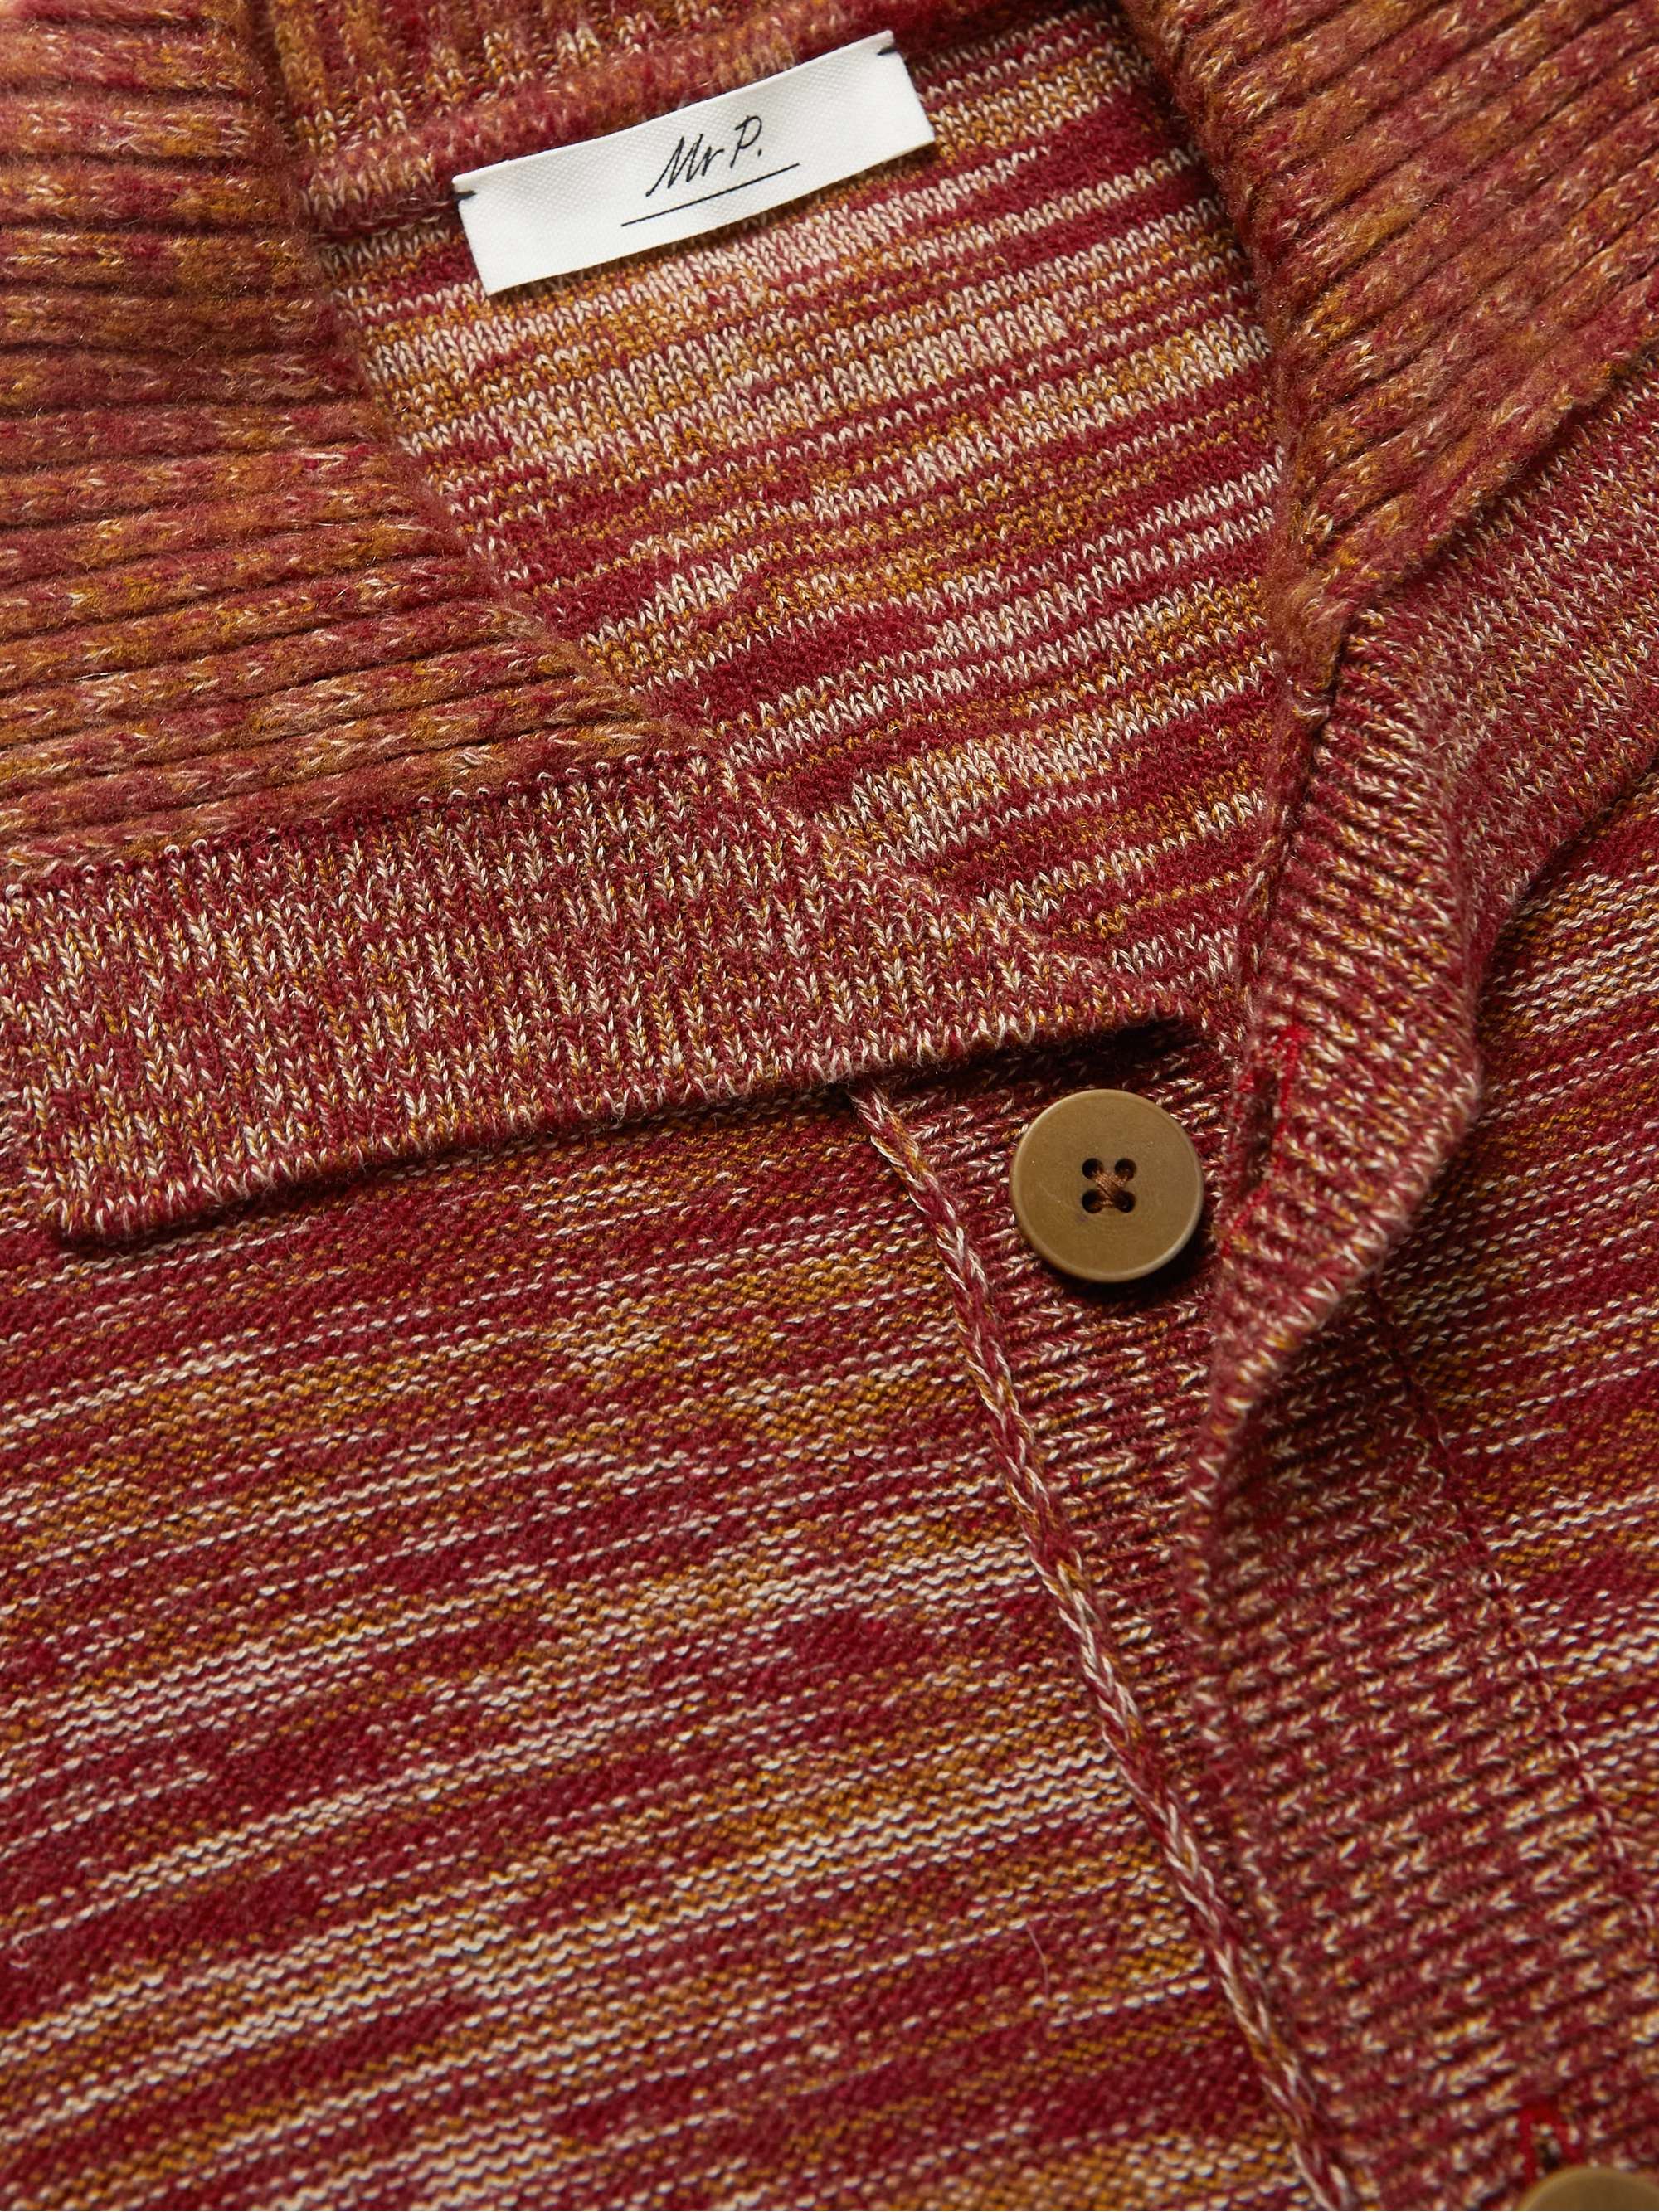 MR P. Brushed Knitted Short-Sleeved Shirt